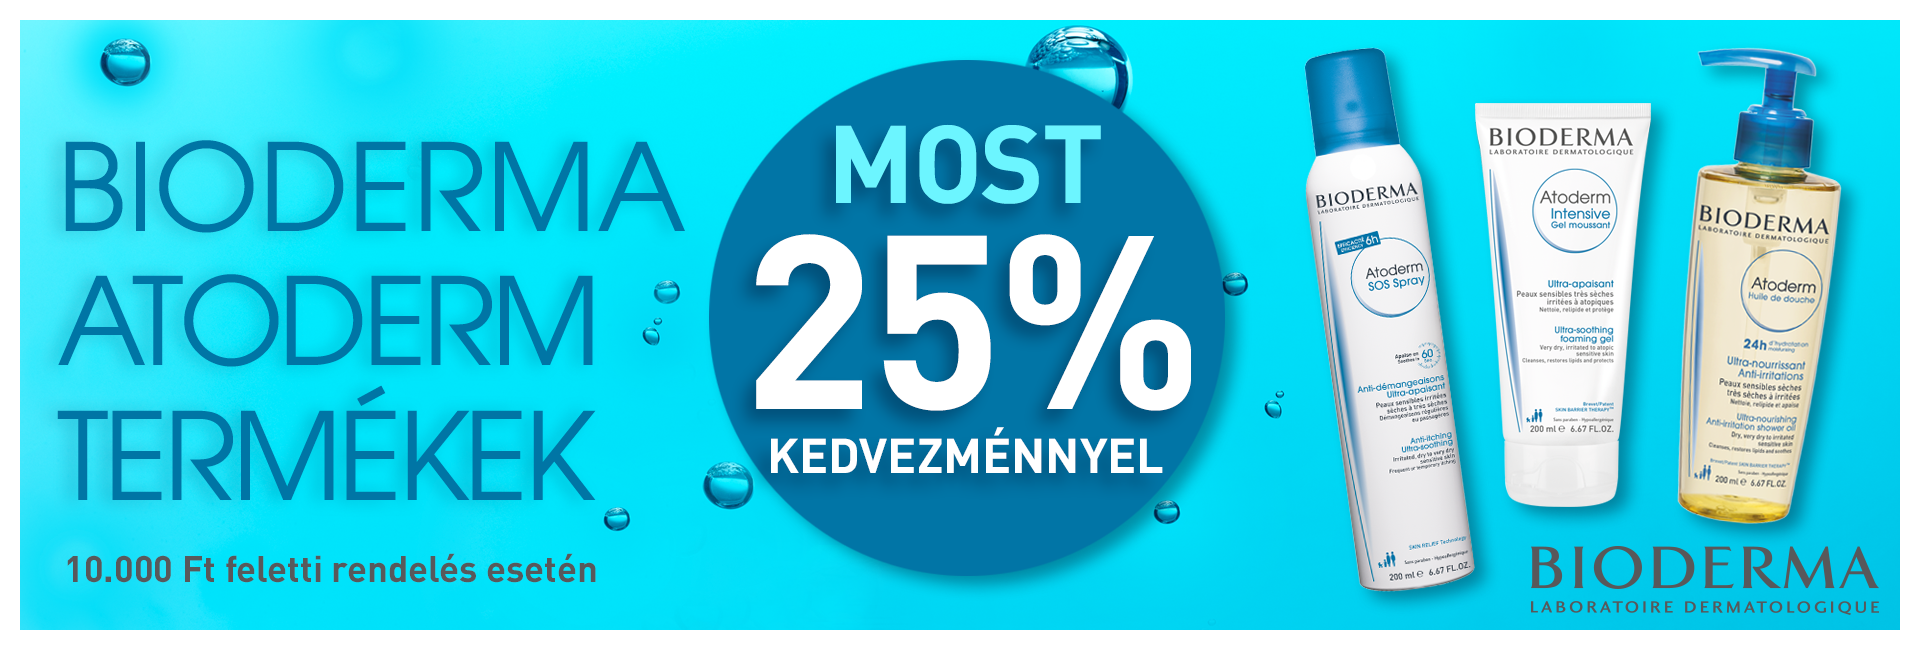 Most minden Bioderma Atoderm termékre 25% kedvezményt adunk!